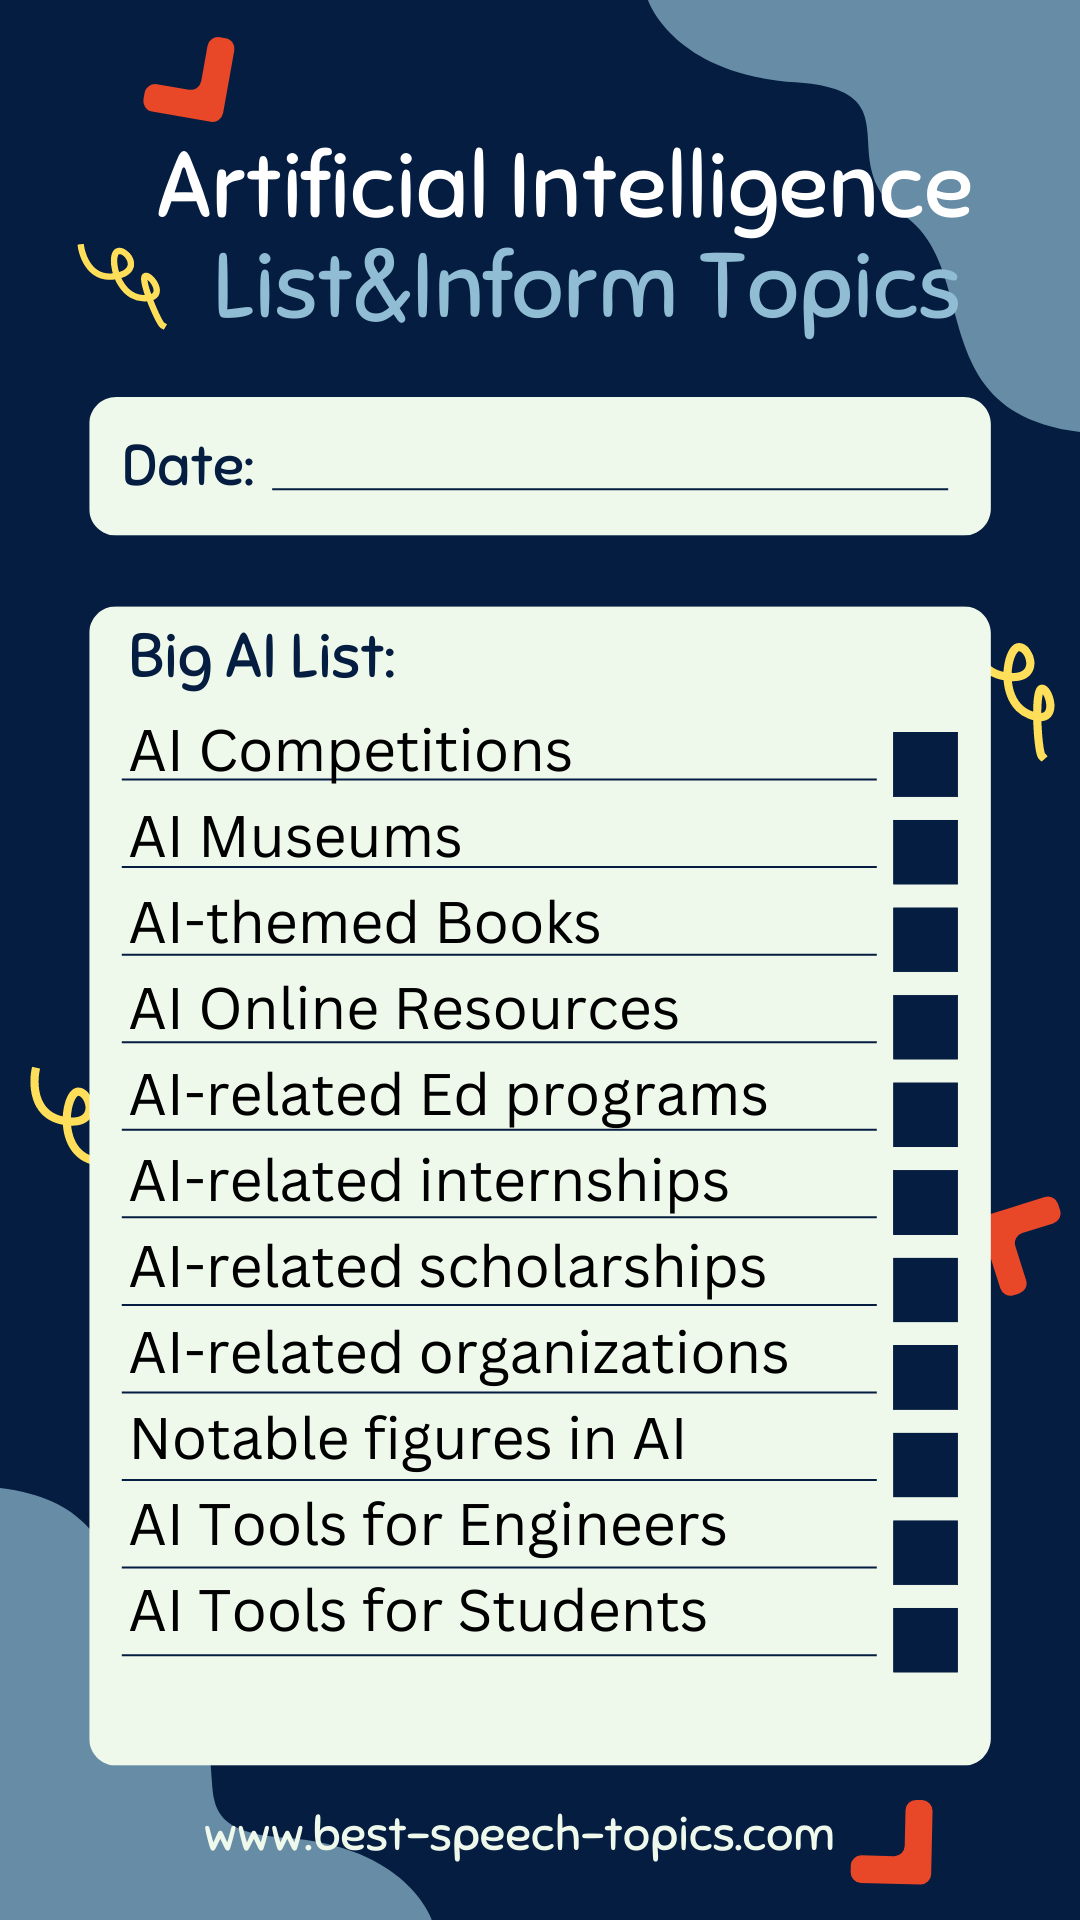 AI List and Inform Topics